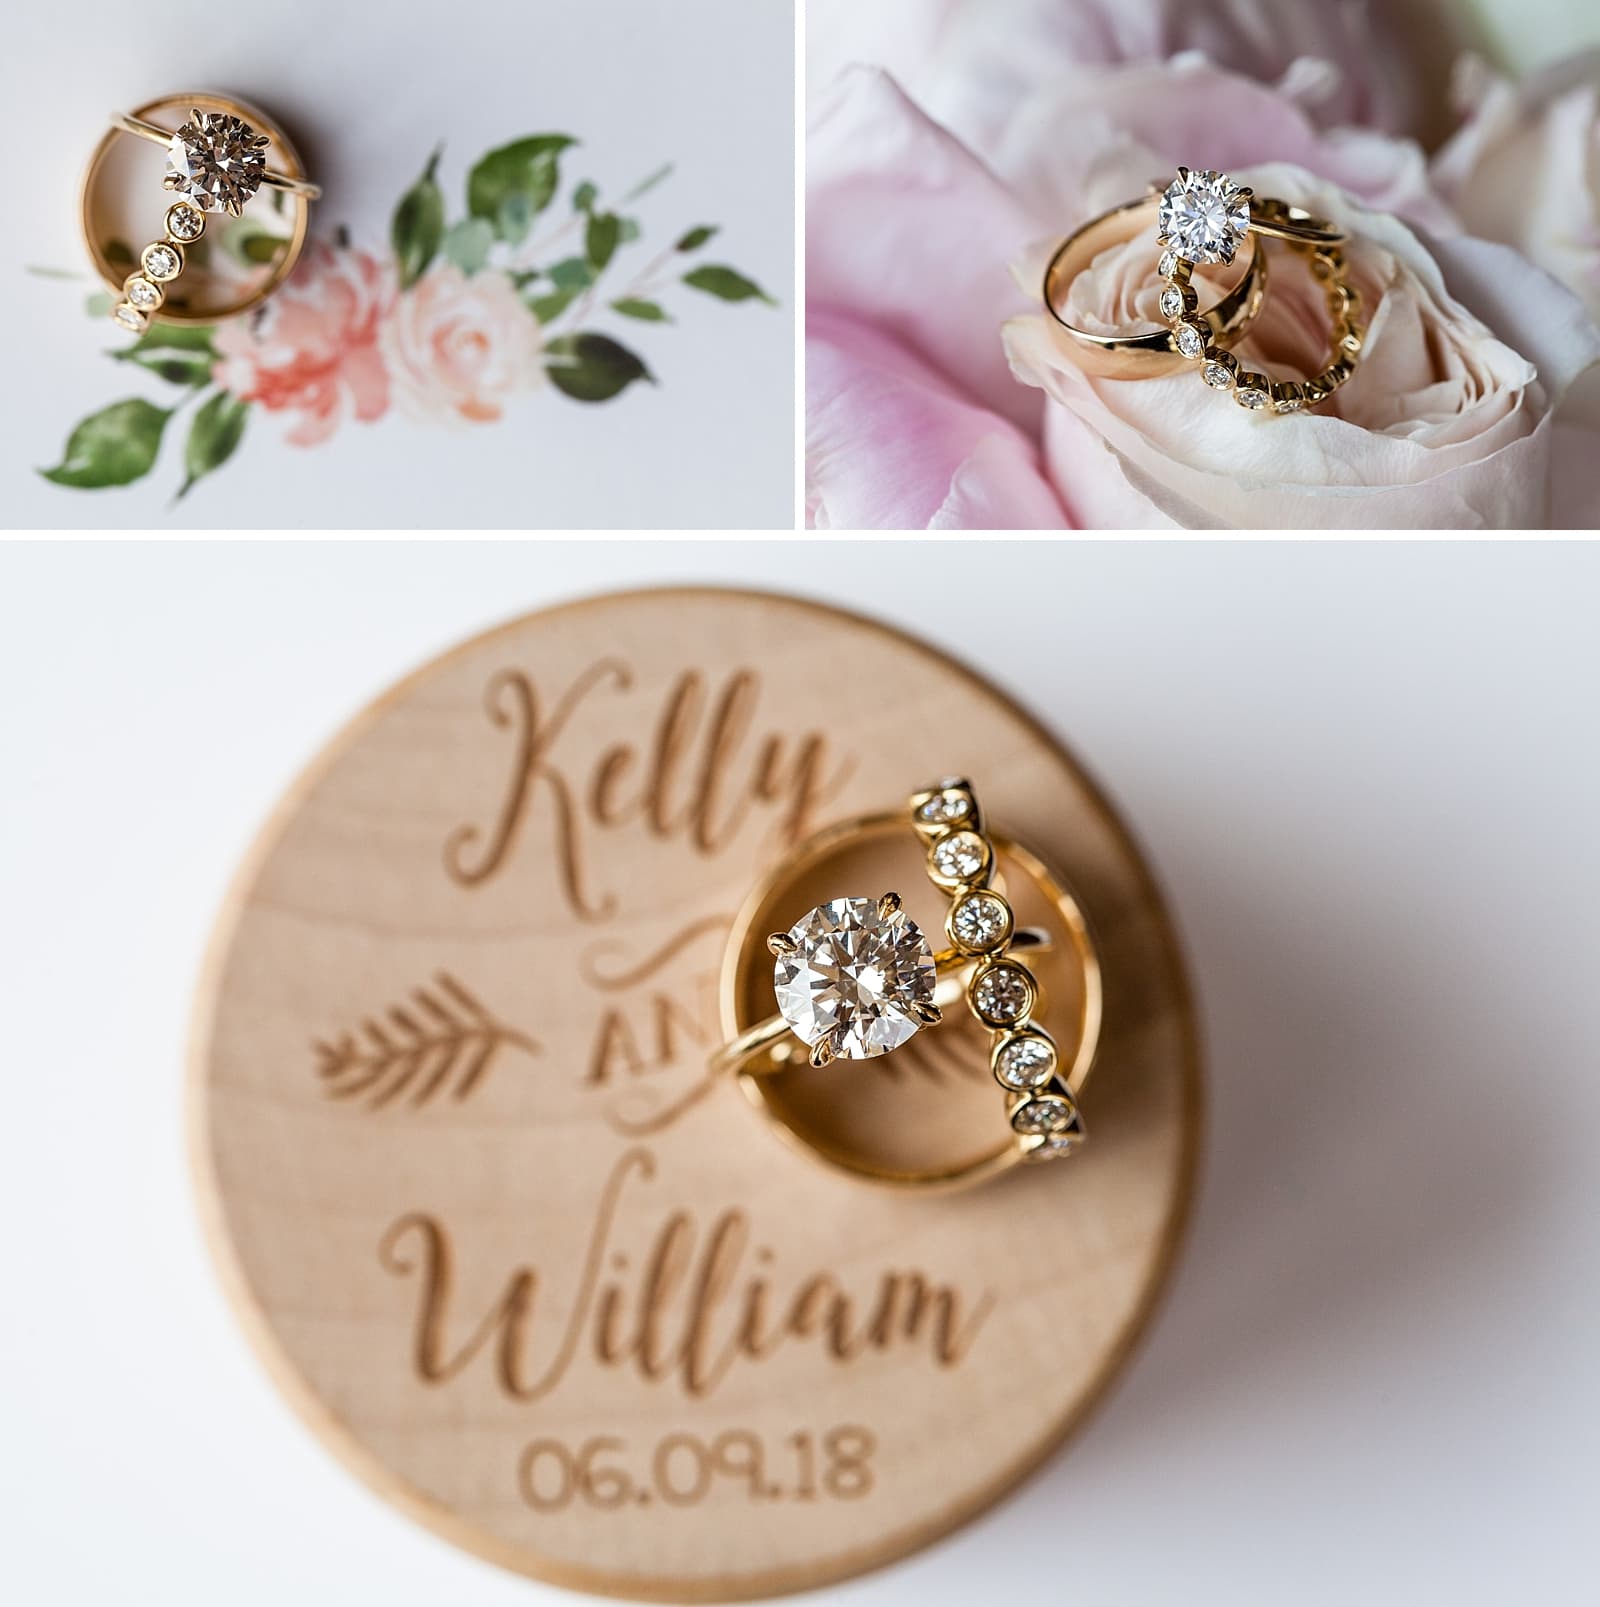 wedding rings, engagement ring, gold rings, flowers